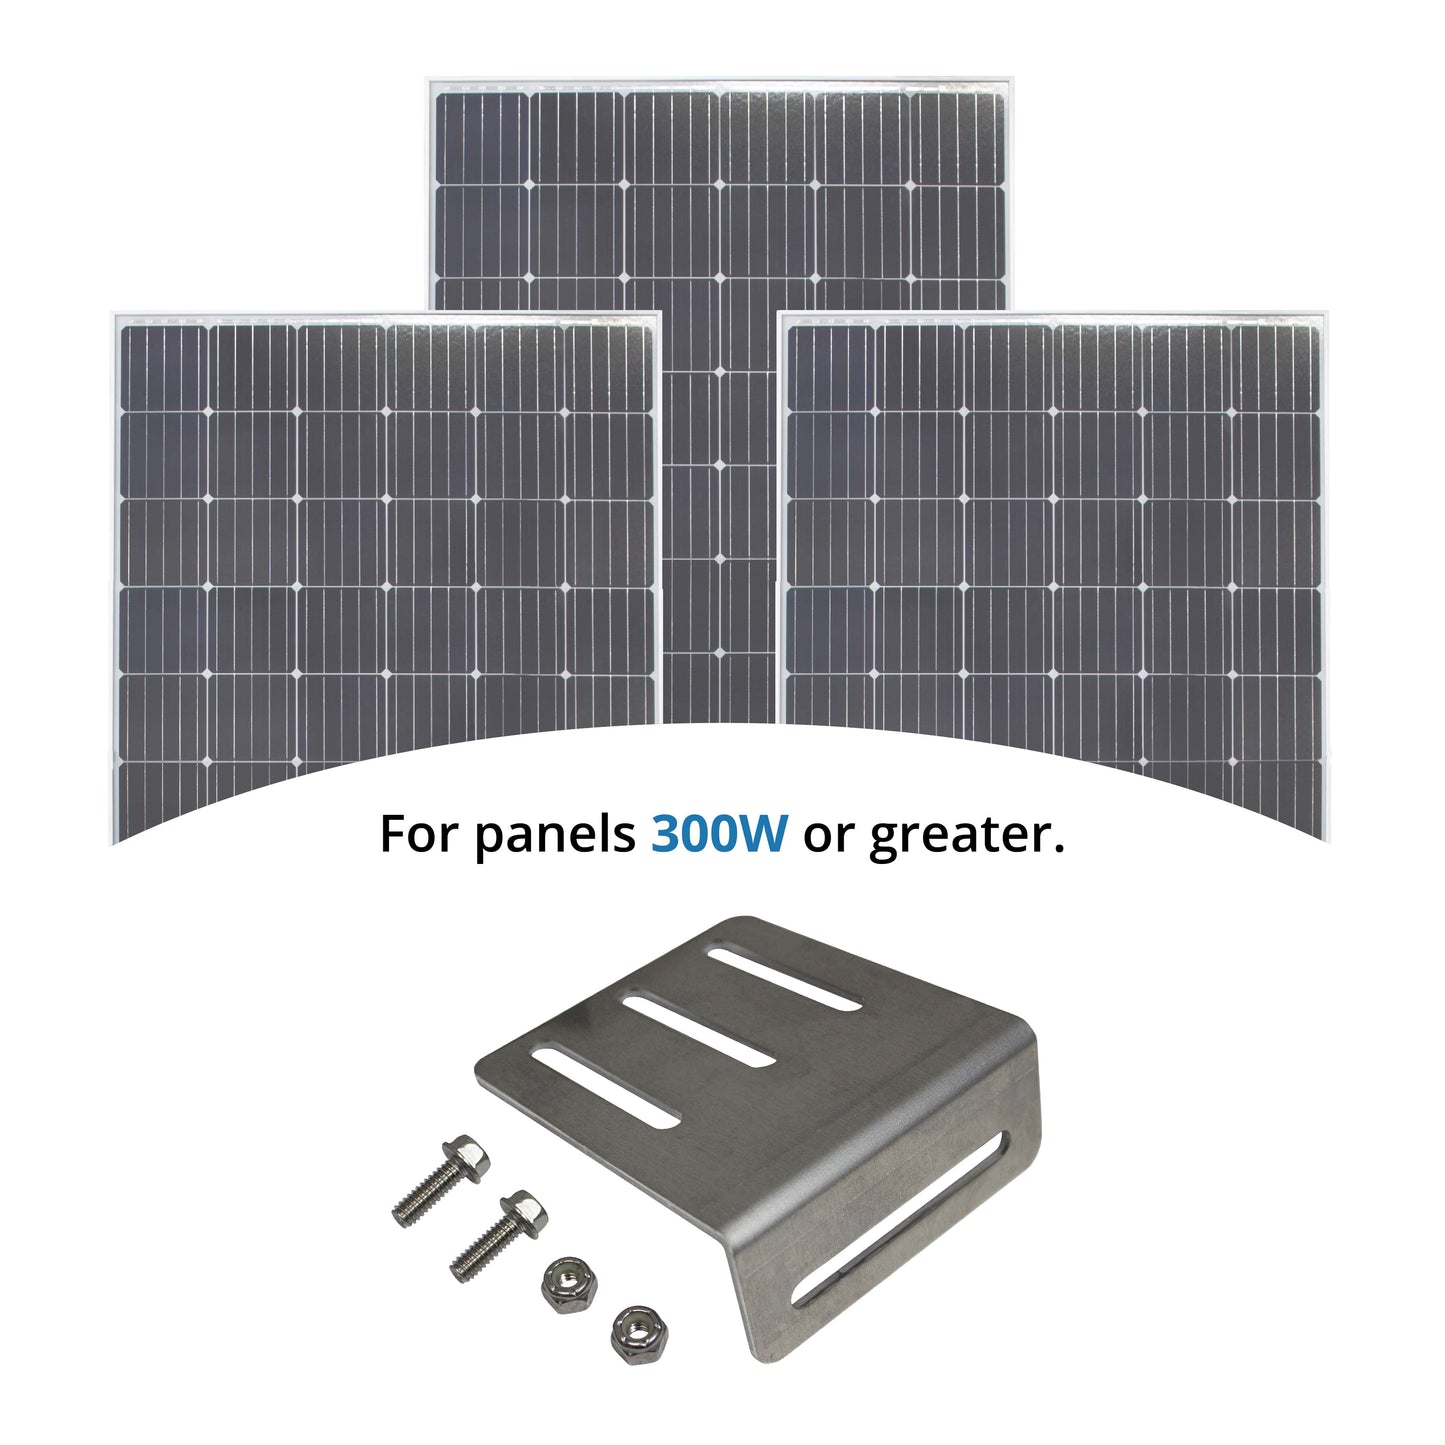 L Bracket Solar Panel Mounting Kit - 4" adjustable